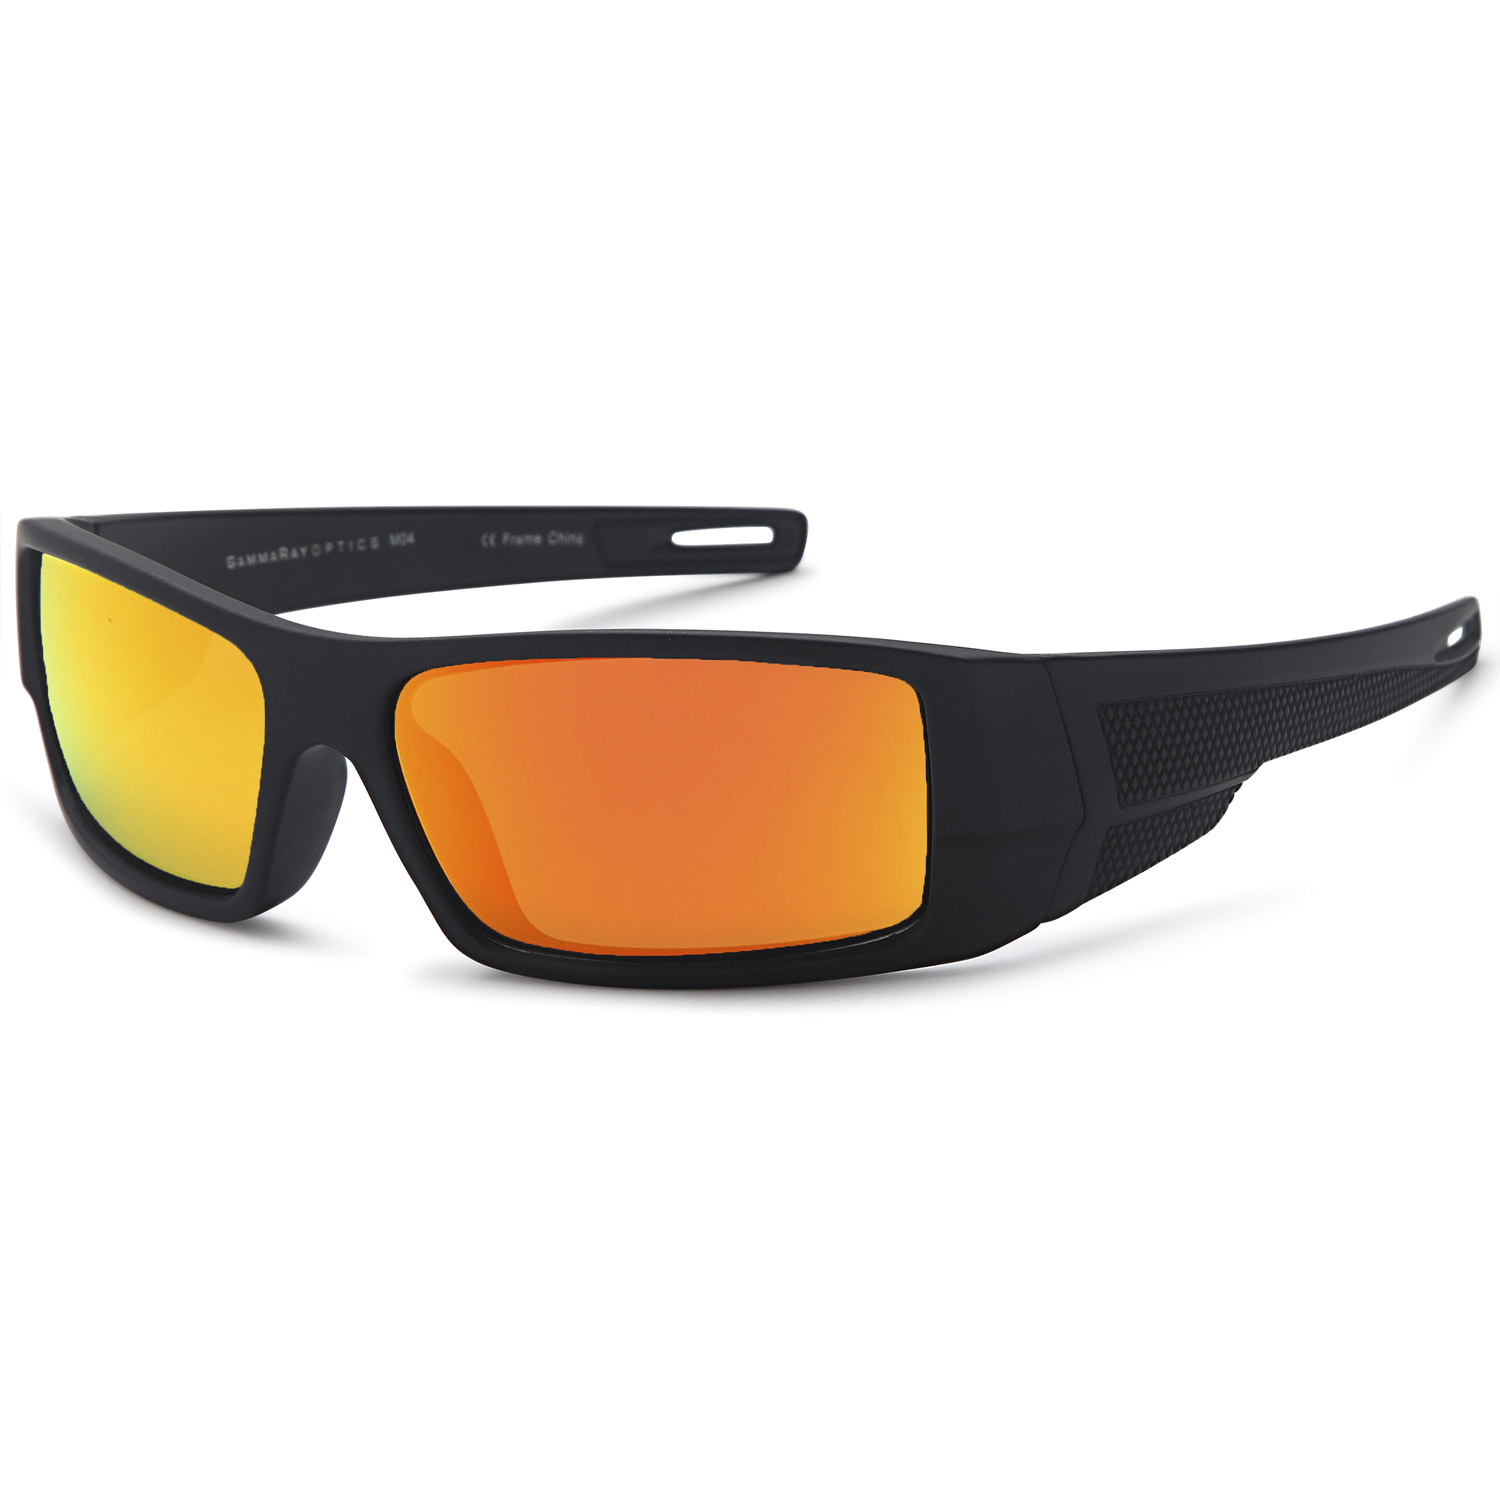 GAMMA RAY Polarized Wrap Around Sports Sunglasses with Shatterproof Nylon Frame - Black Frame Mirror Orange Lens - image 1 of 7